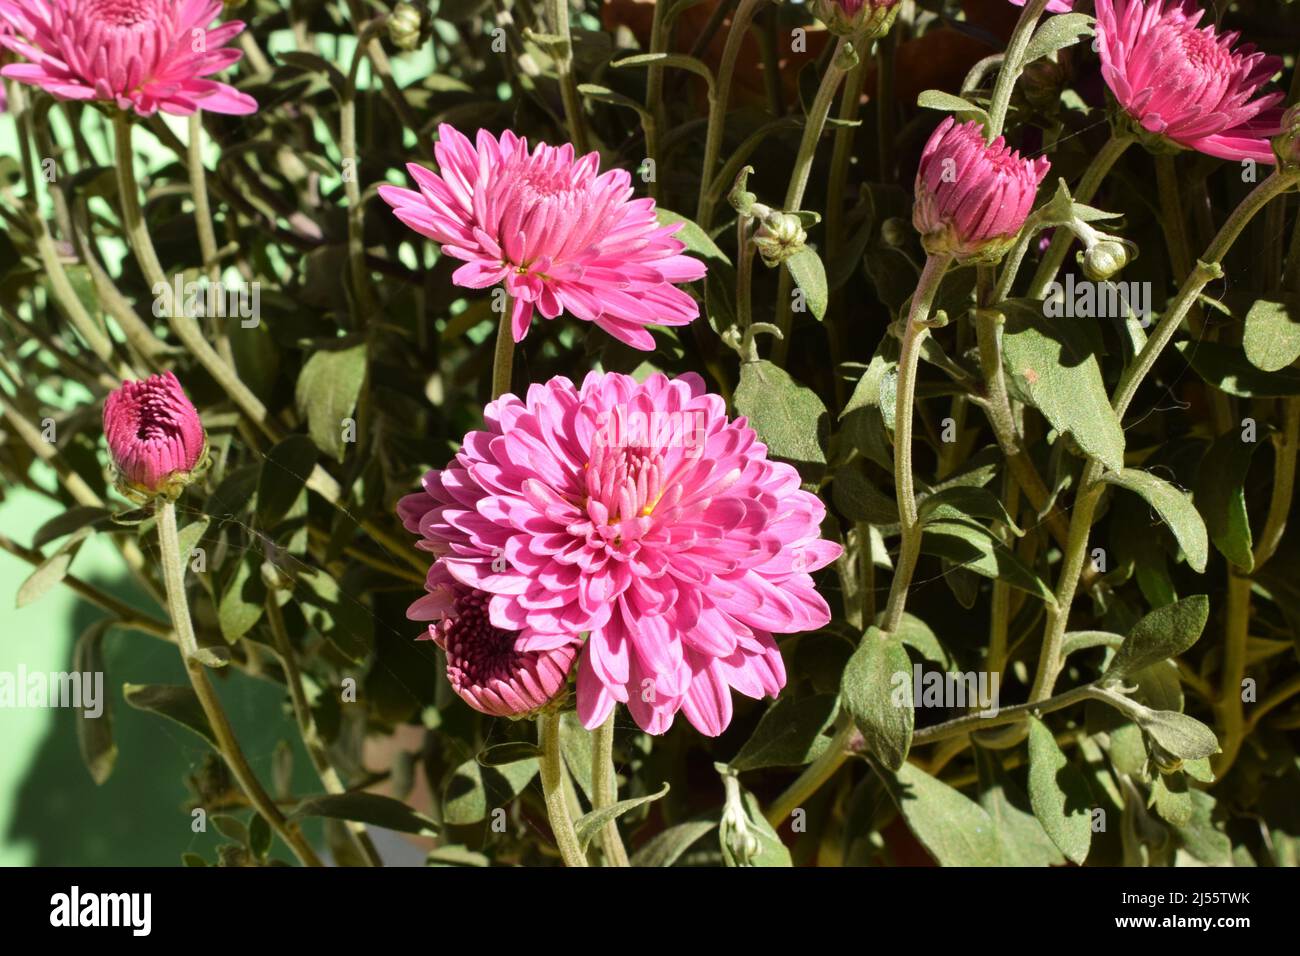 Chrysanthemum flowers close up. Pink Chrysanthemums. Floral background of autumn purple chrysanthemums. Stock Photo